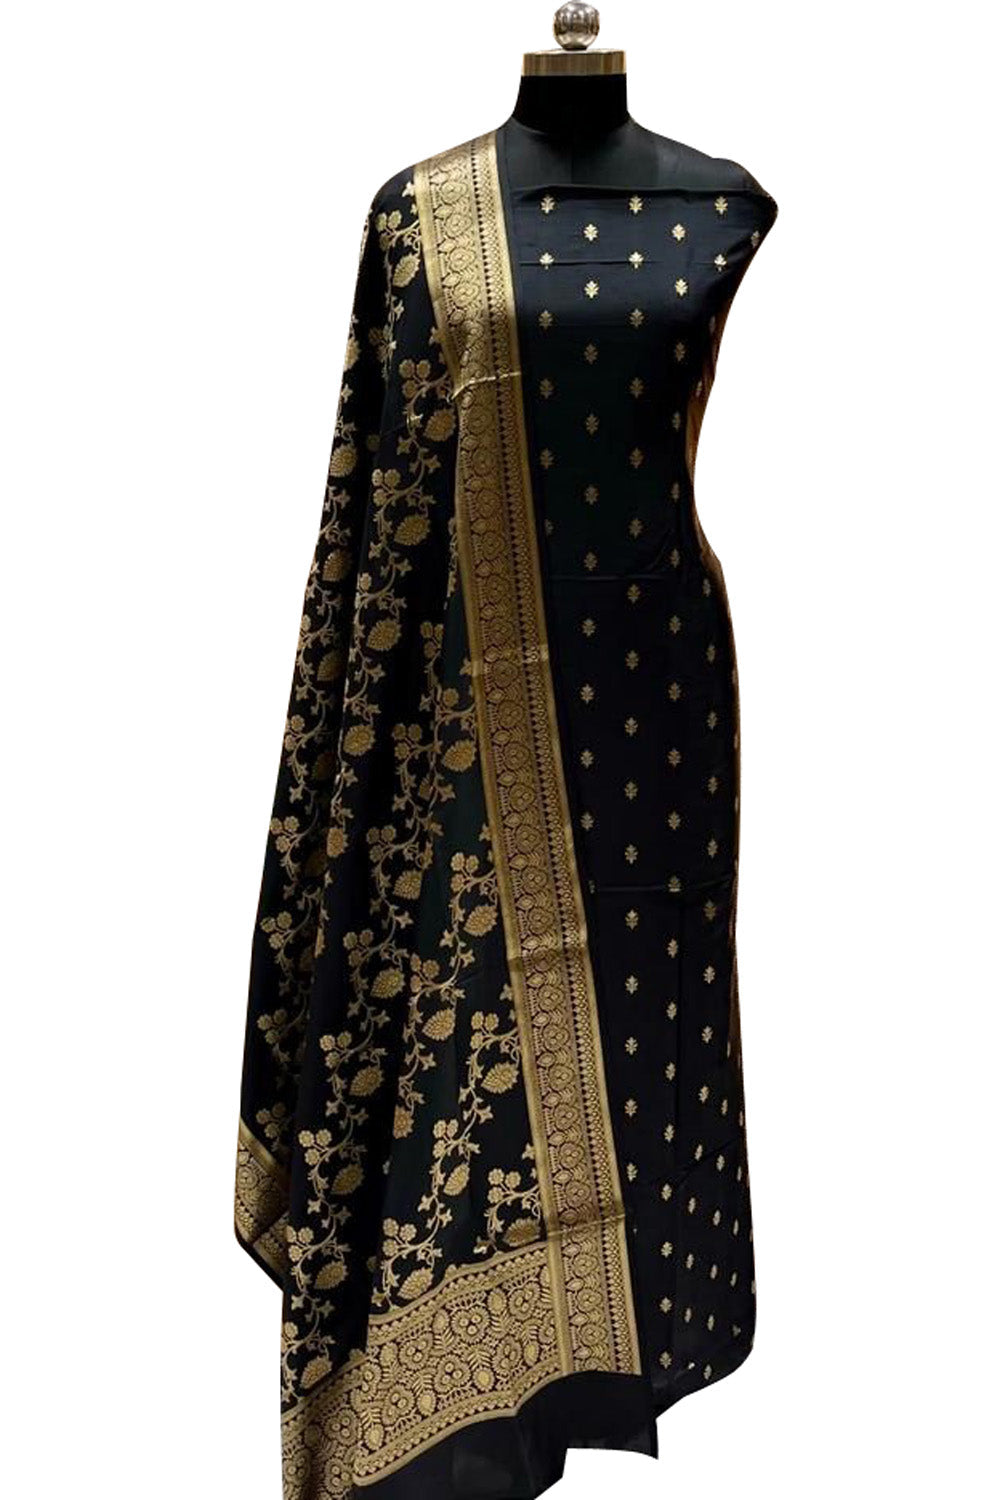 Timeless Elegance: Luxury Black Banarasi Silk Suit - Luxurion World